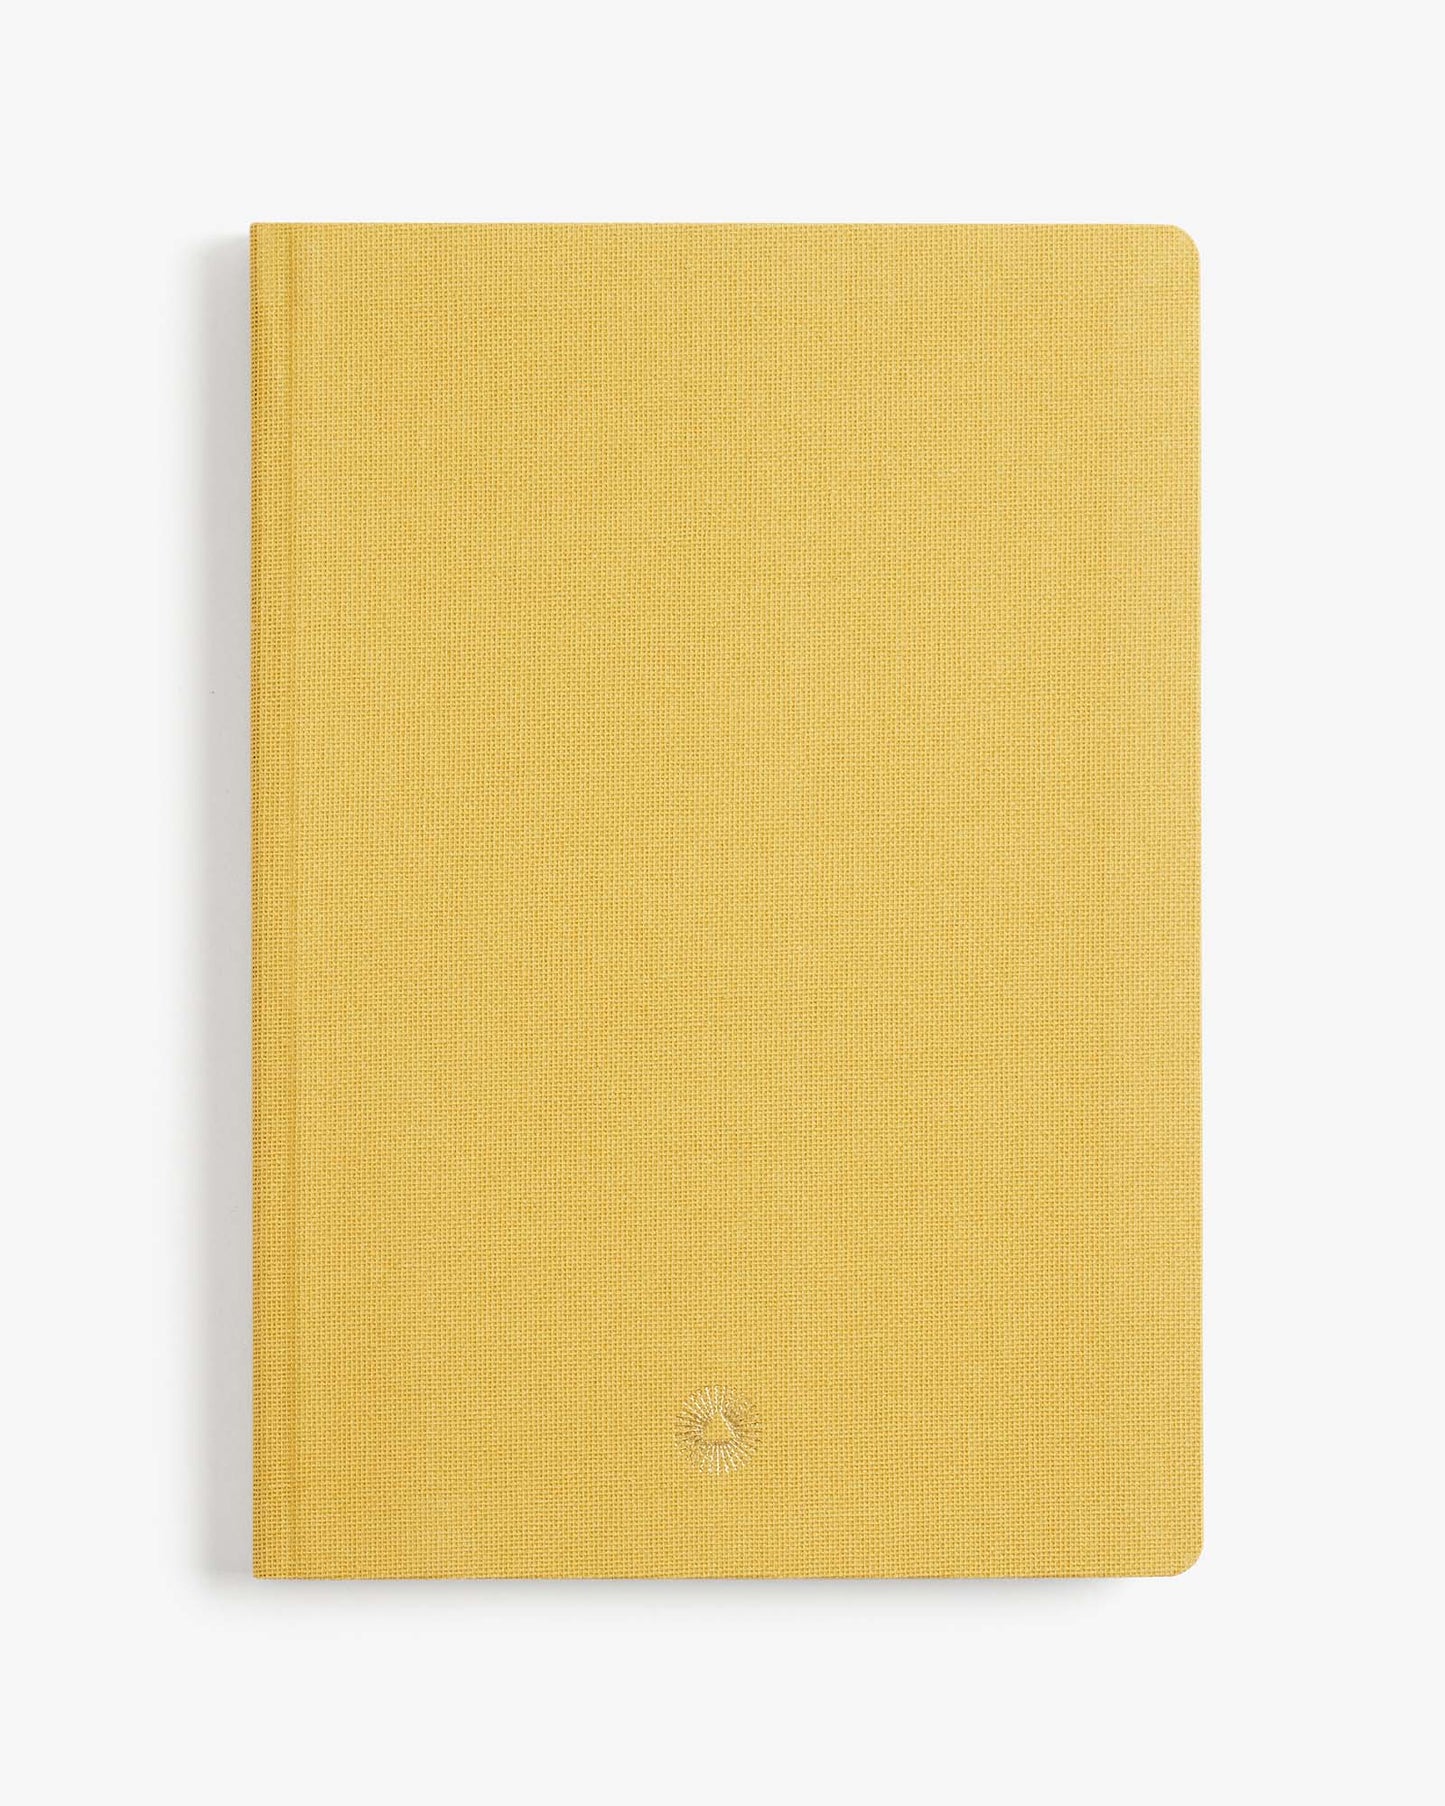 Premium Notebook - Yellow by Intelligent Change